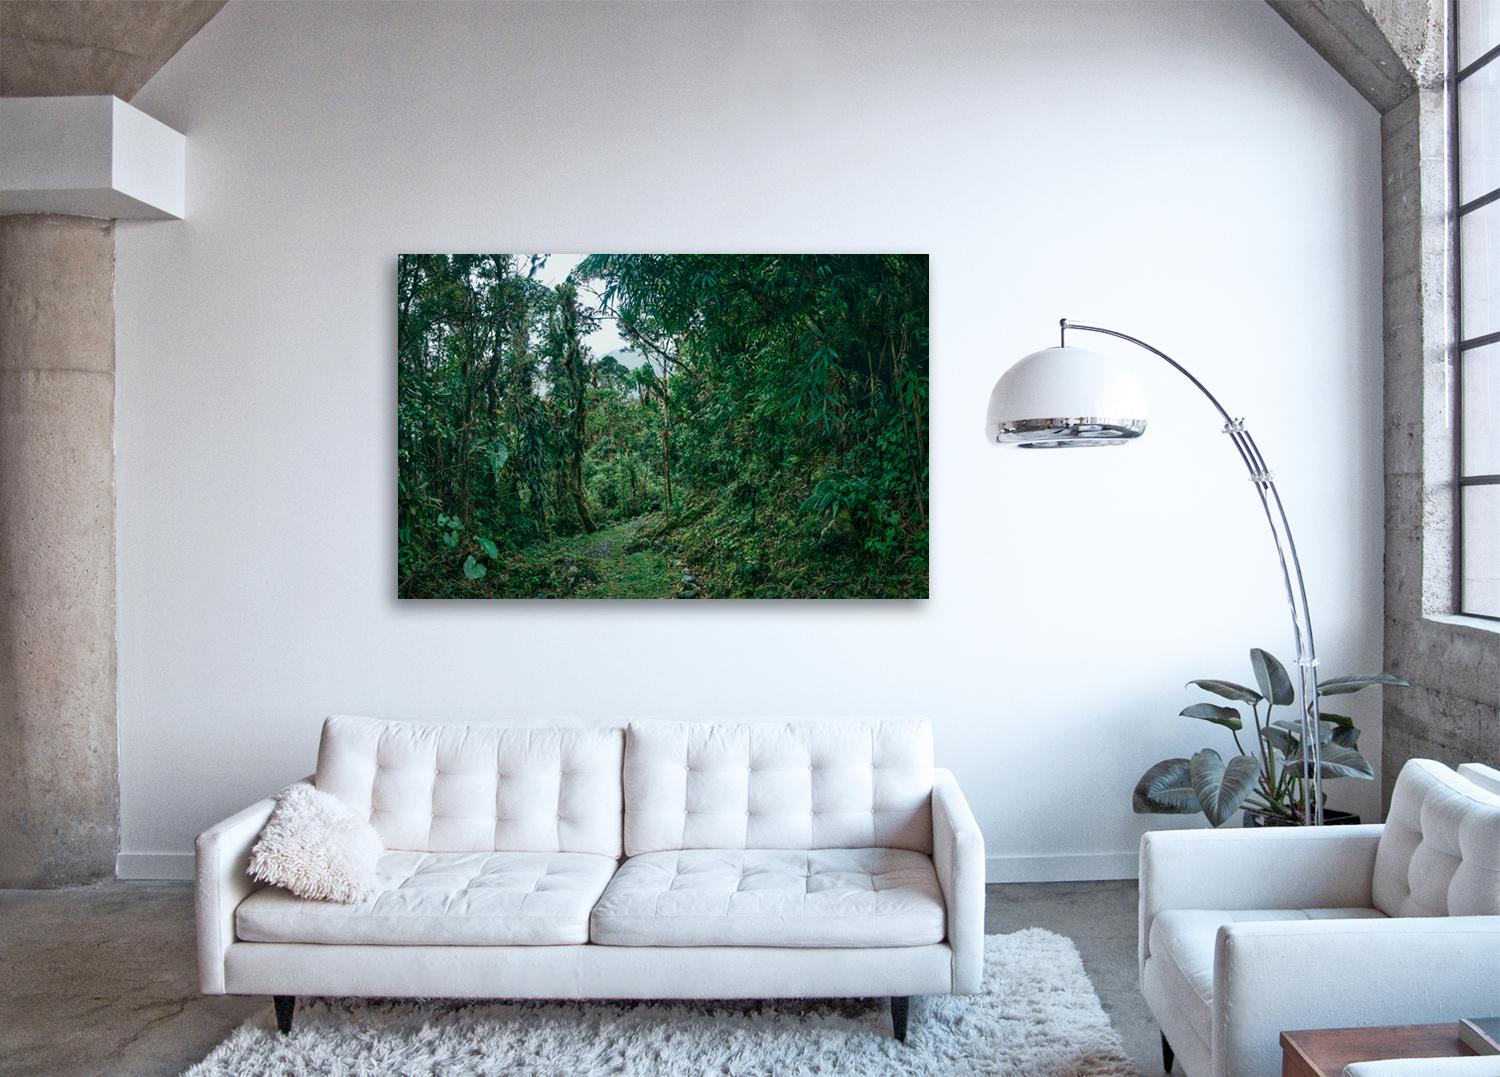 Cloud Forest II  -large format photograph of fantastical tropical rainforest - Contemporary Print by Erik Pawassar